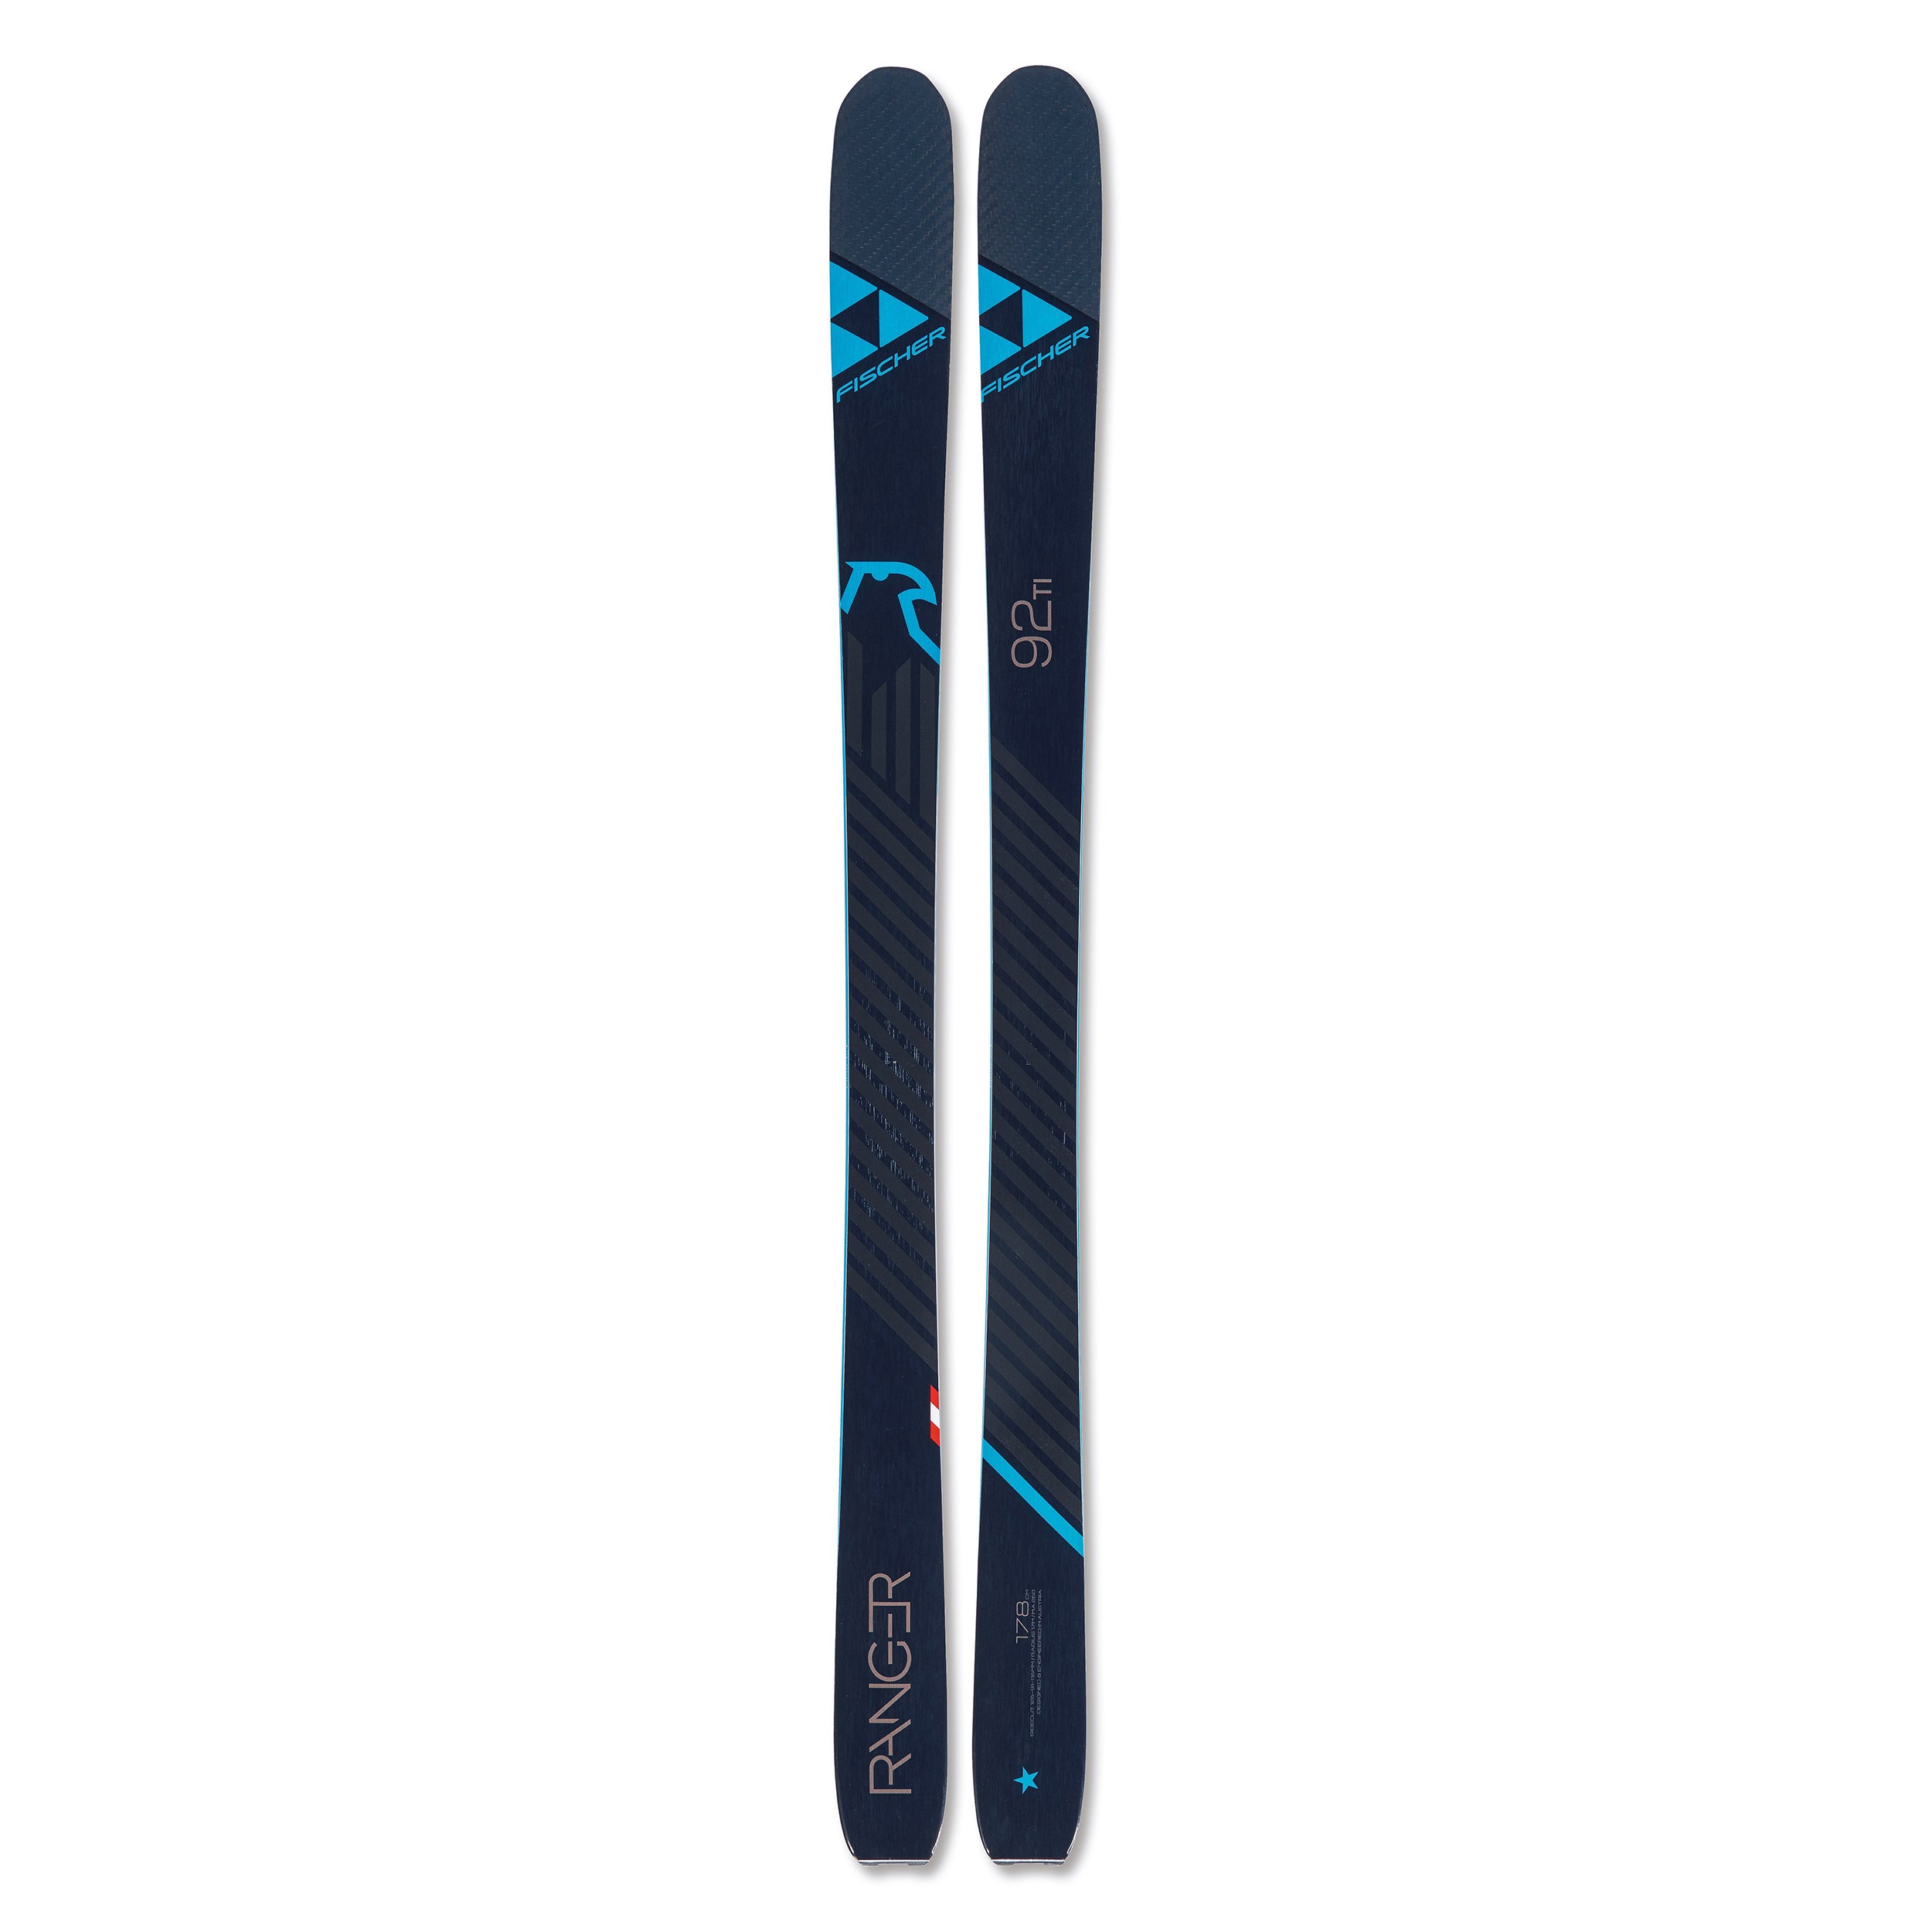 Ranger 92 Ti Ski – Ski Whites